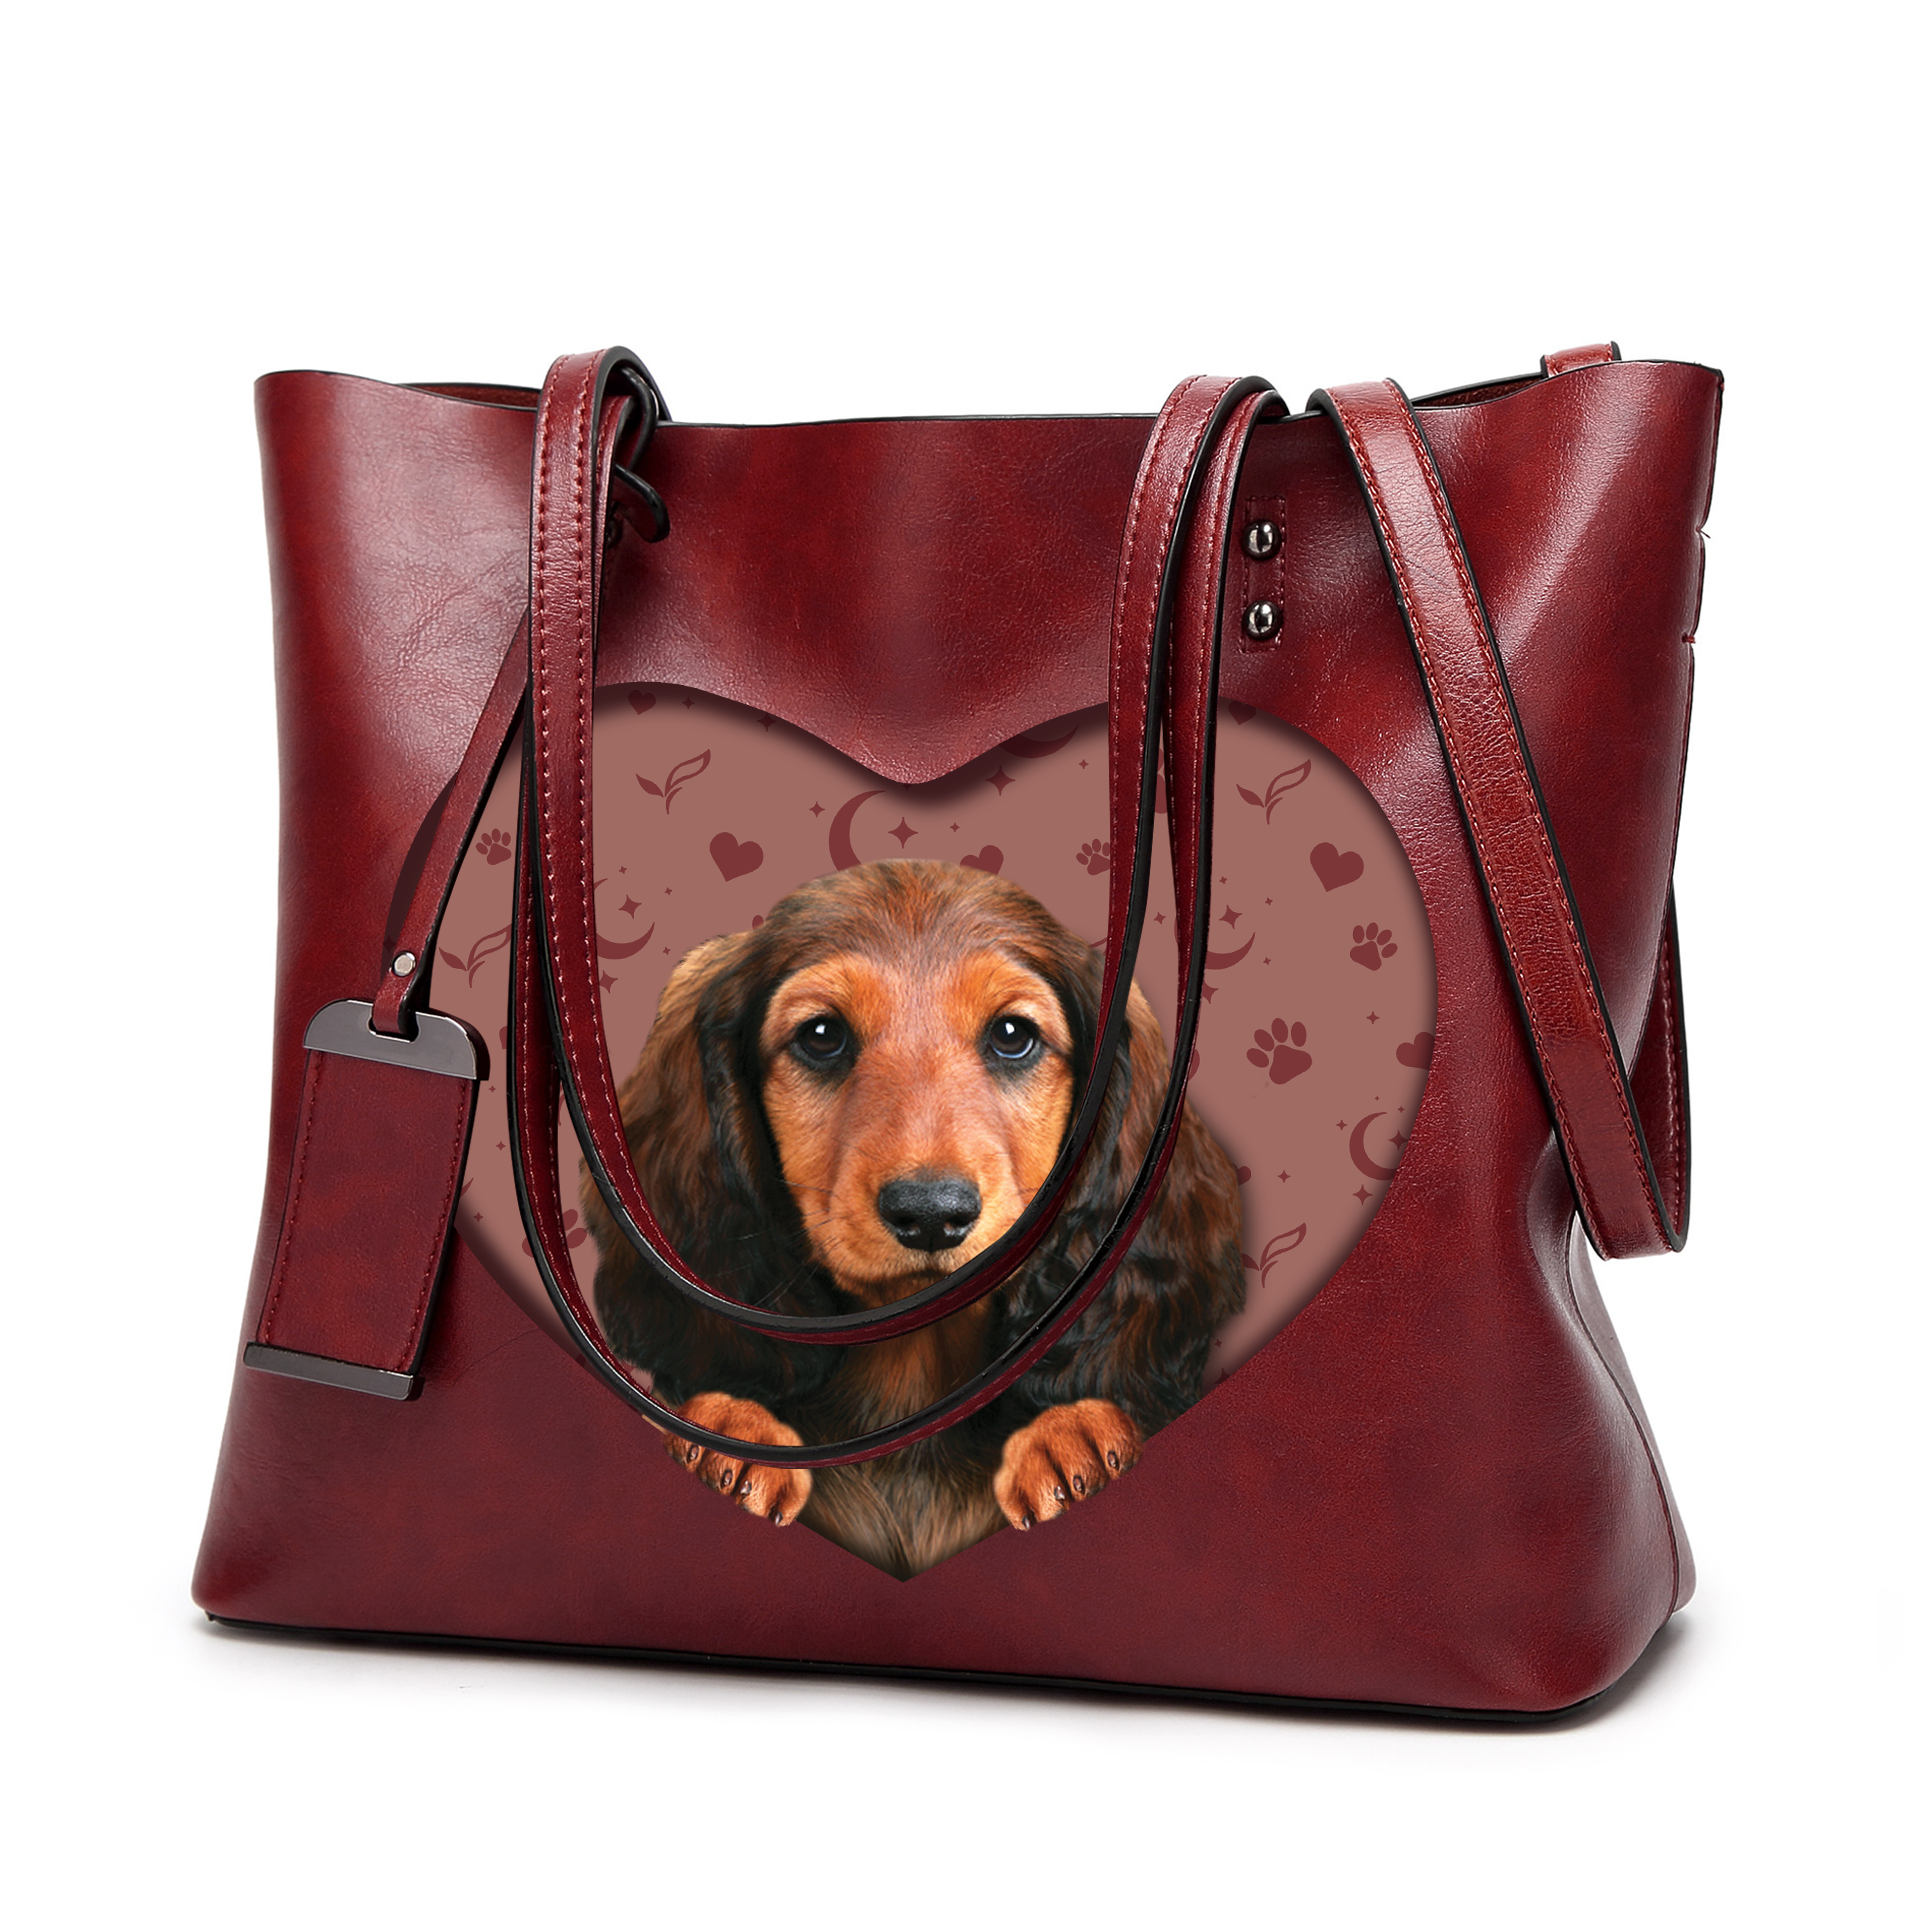 I Know I'm Cute - Dachshund Glamour Handbag V3 - 5